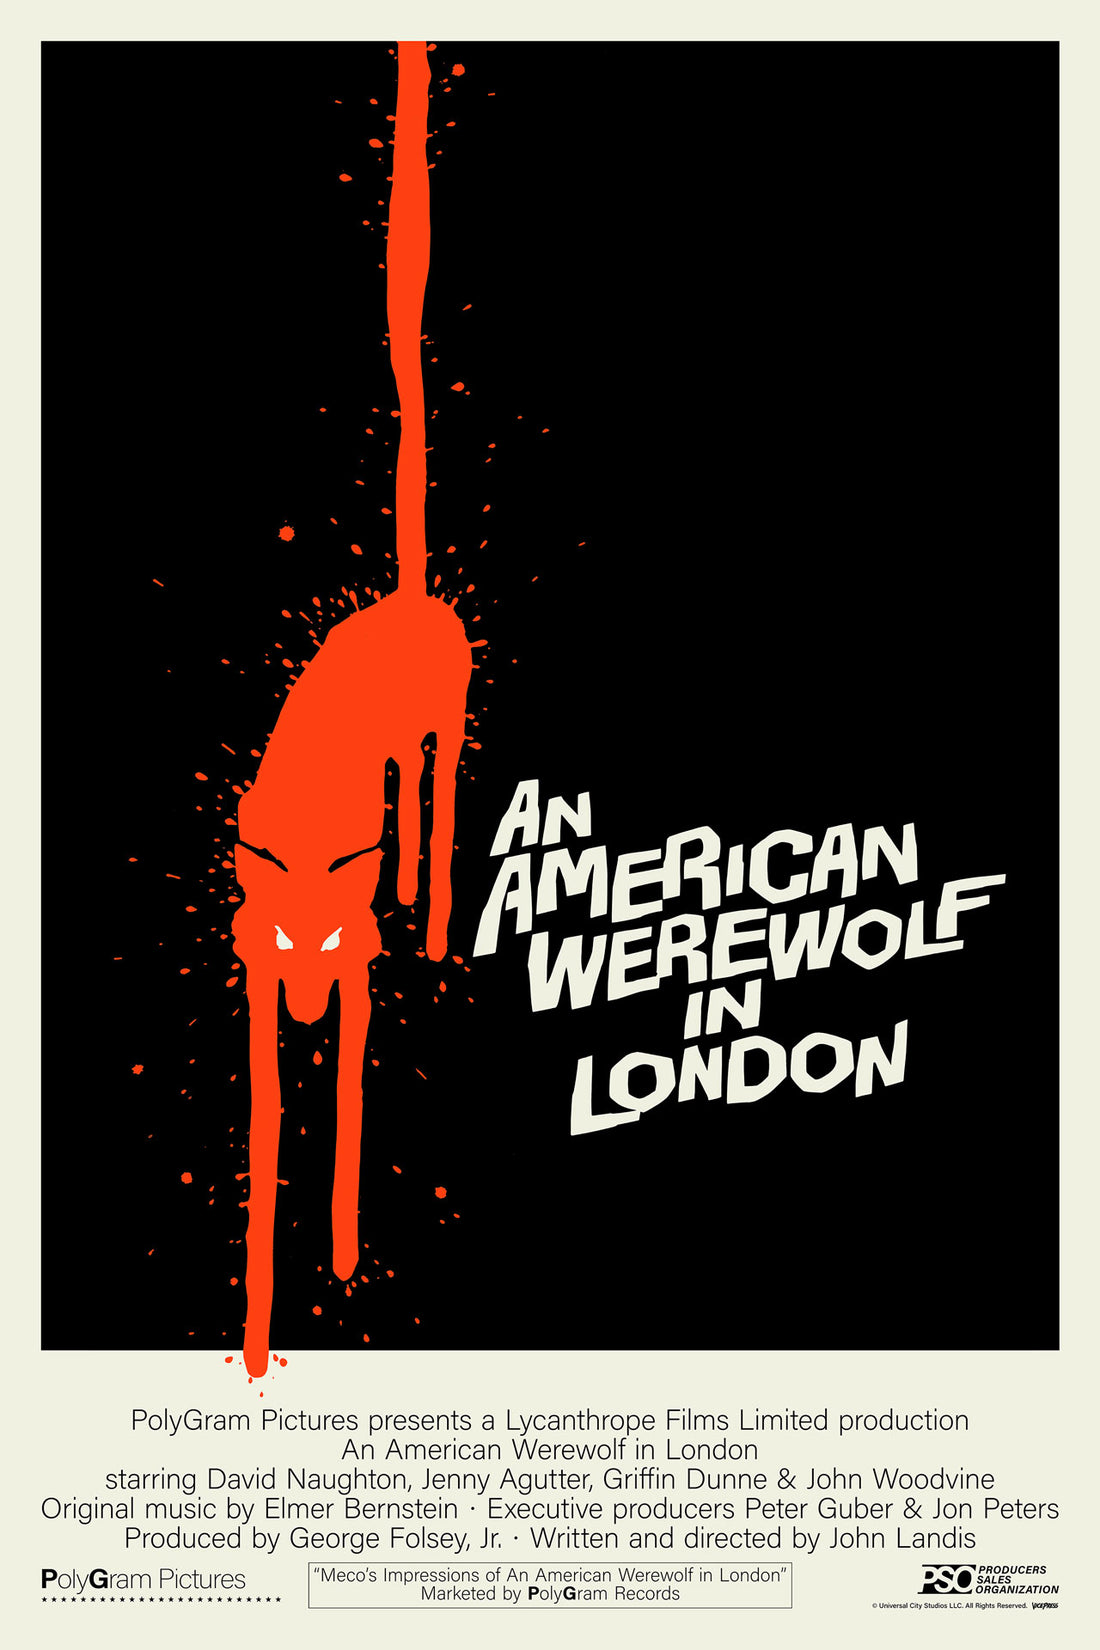 An American Werewolf in London original movie poster